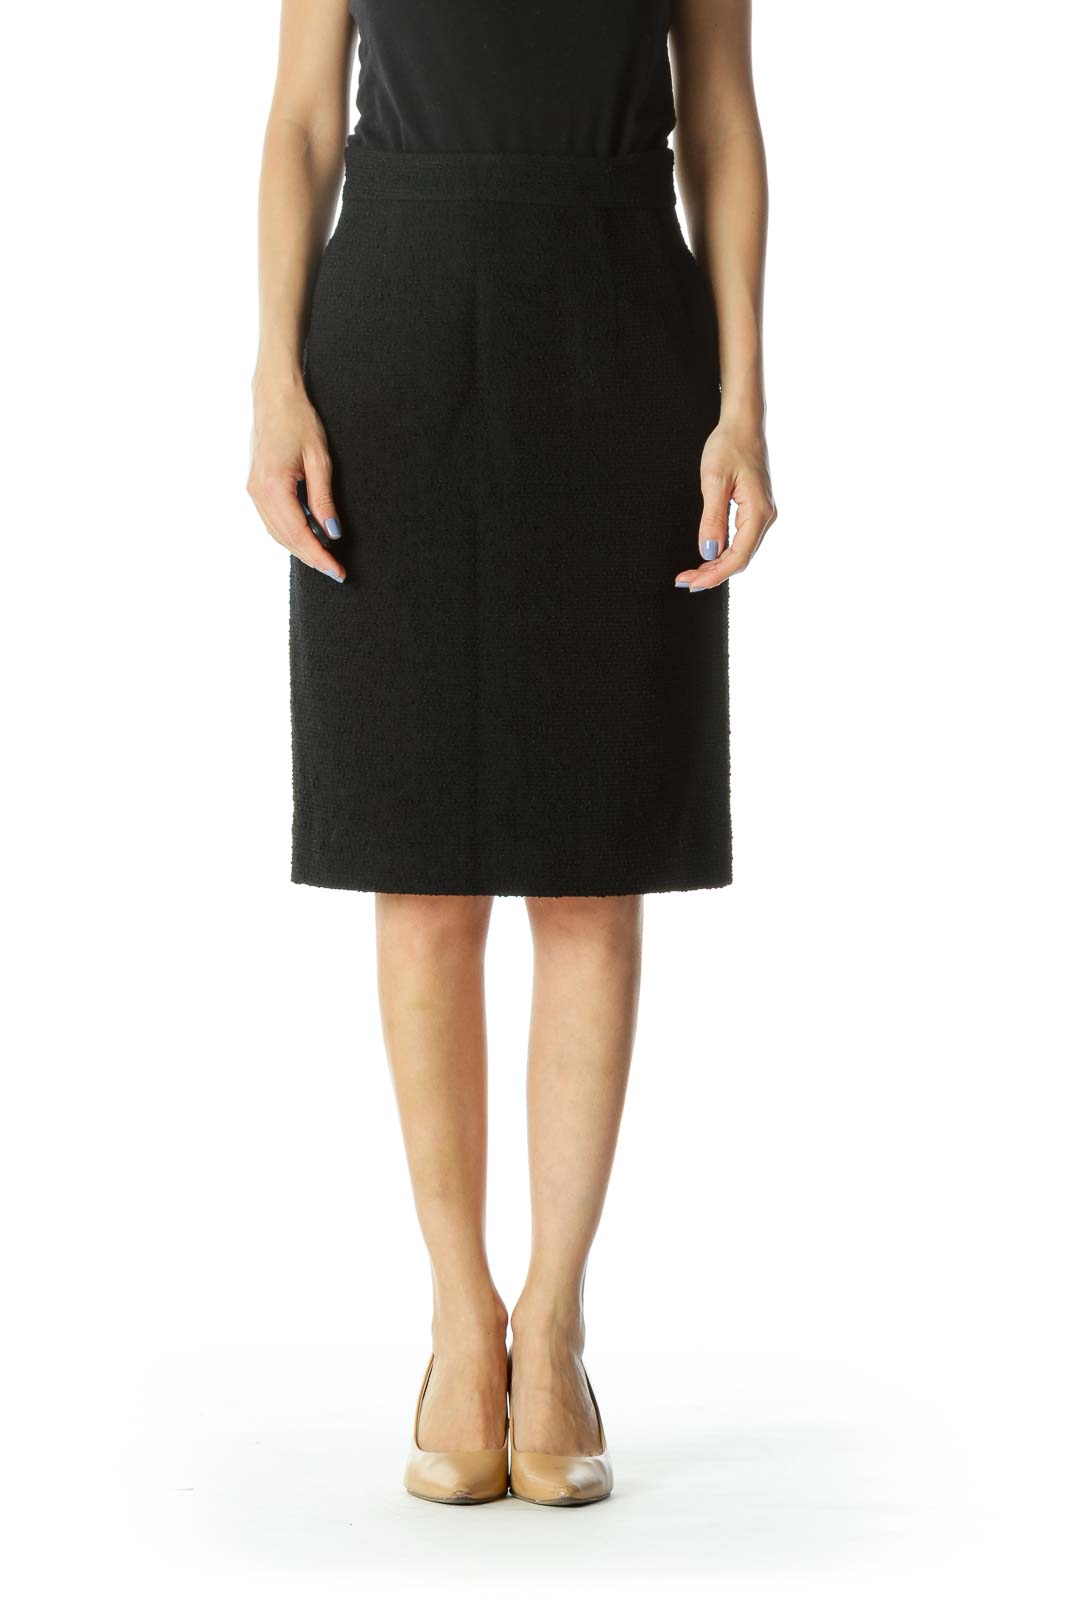 Black Textured Designer Pencil Skirt Front